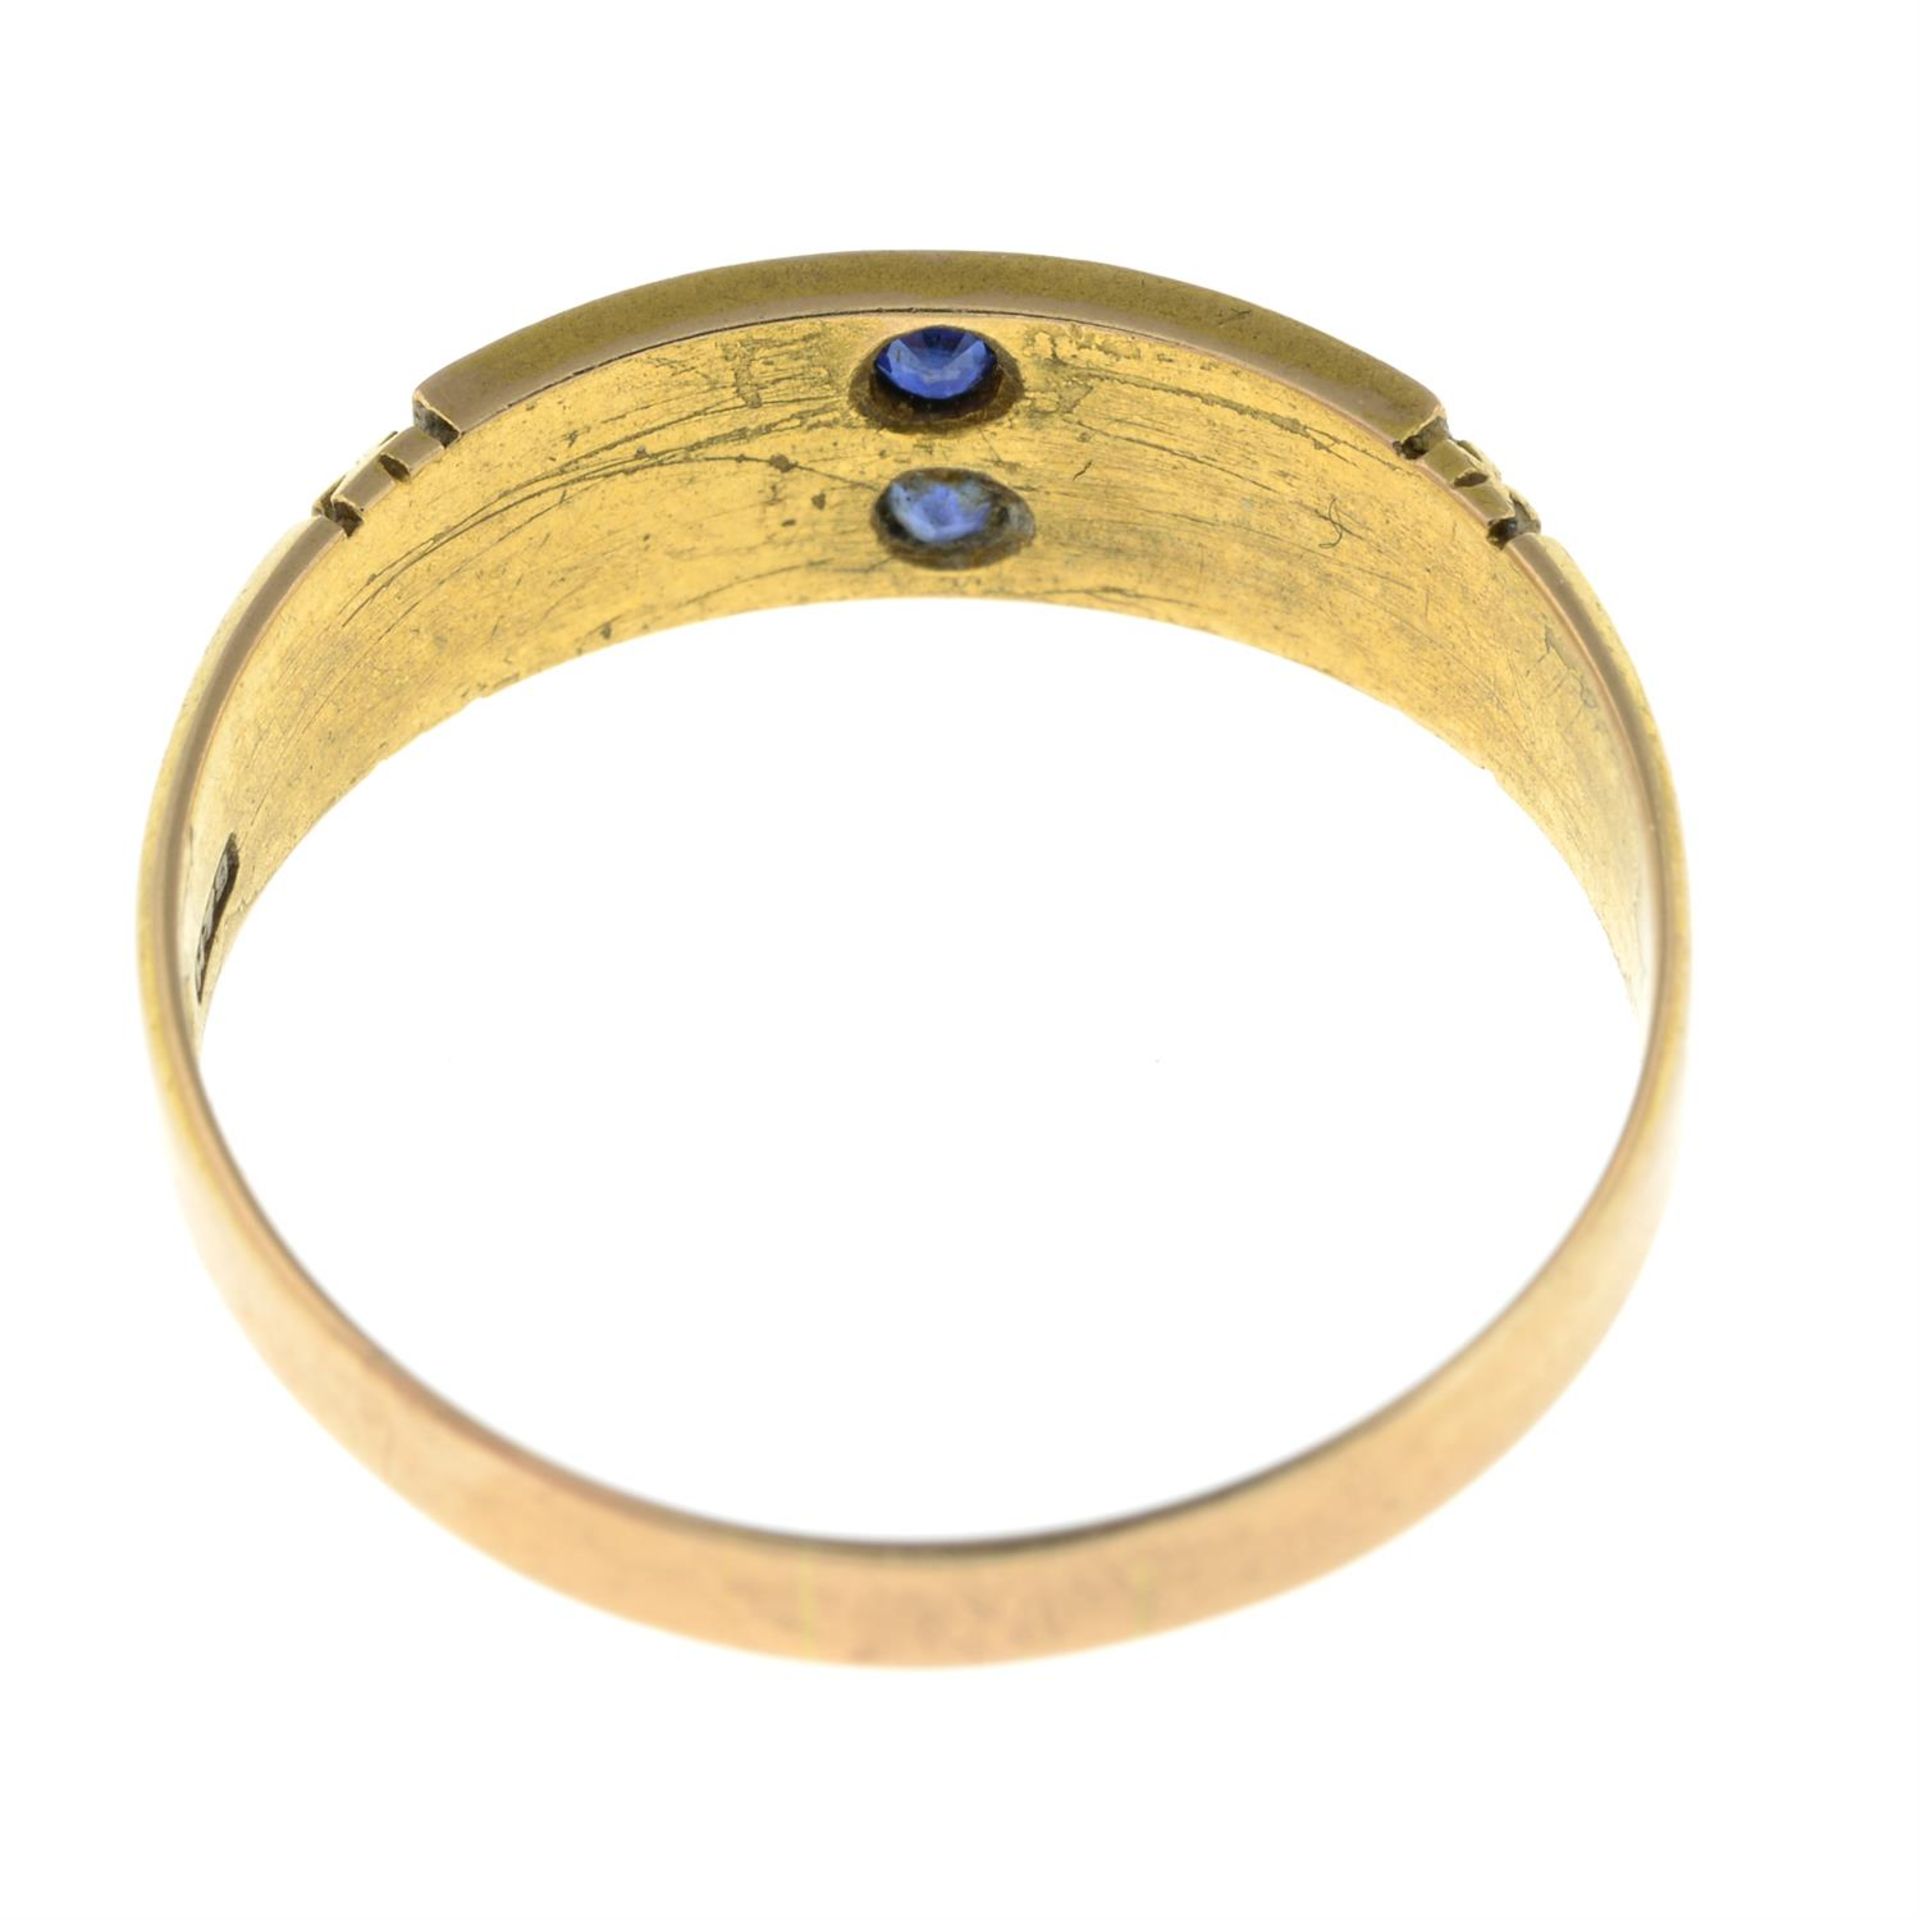 Edwardian 15ct gold ring - Image 2 of 2